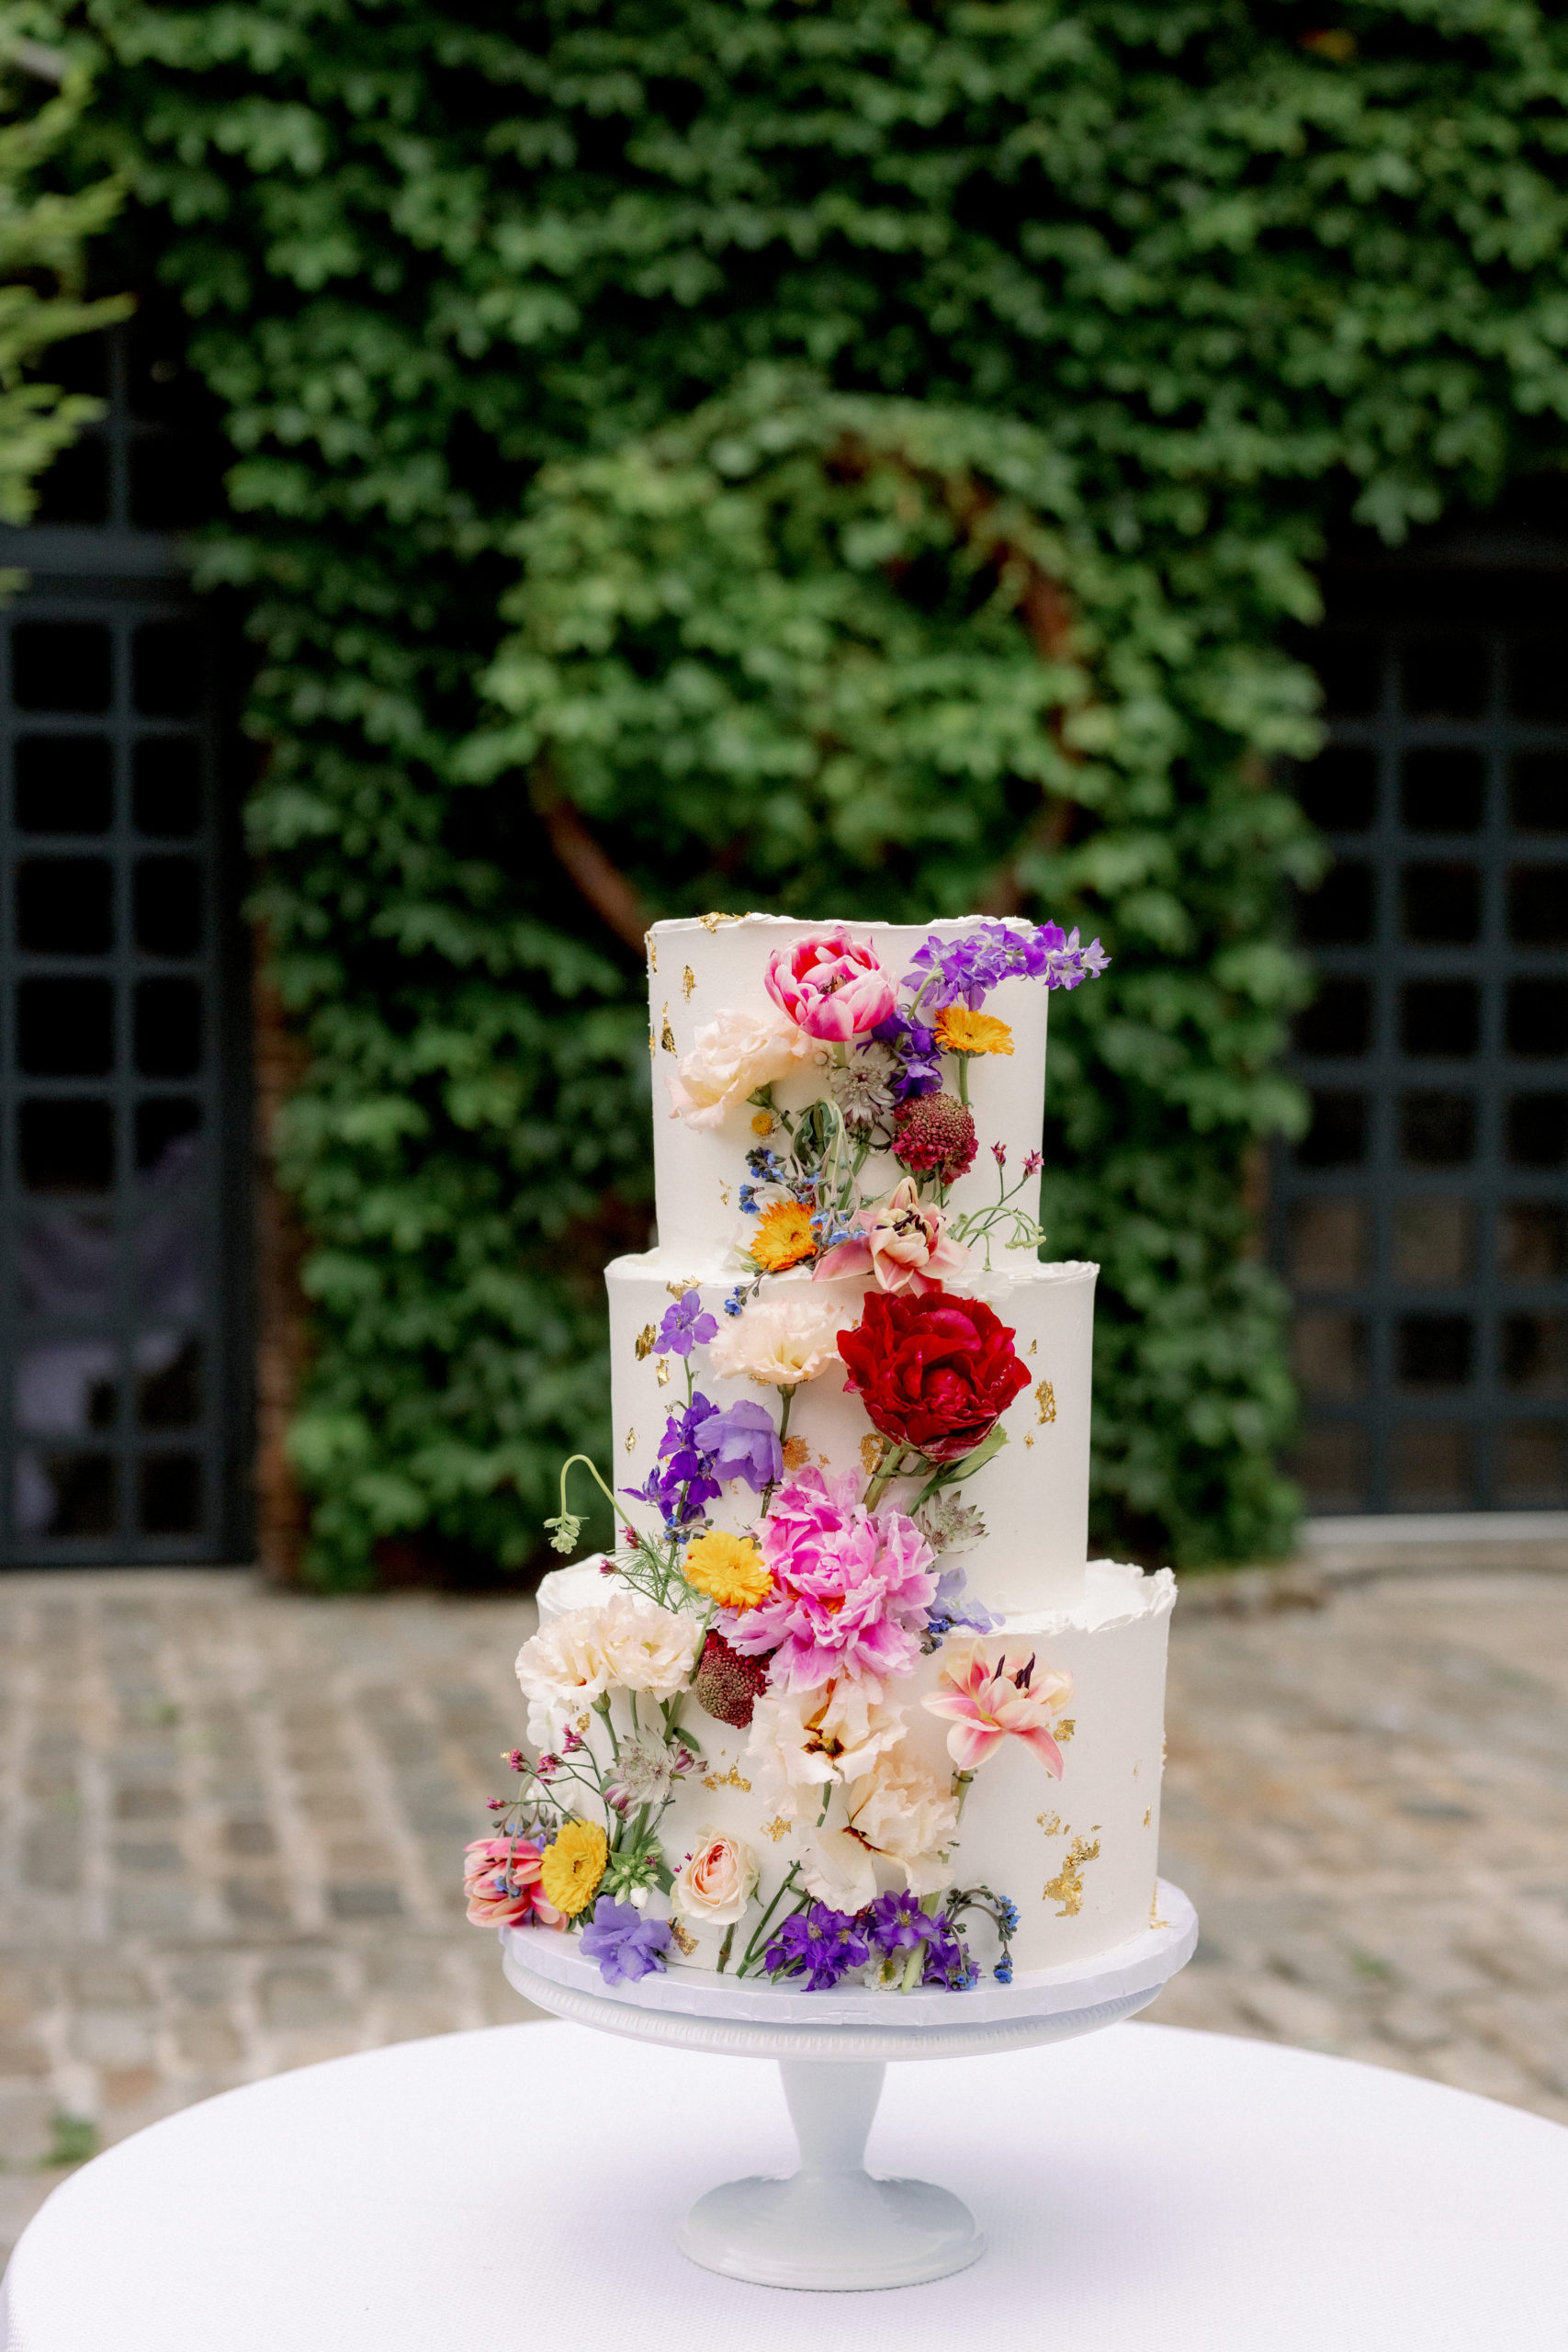 A beautiful wedding cake. Film vs. digital wedding photography image by Jenny Fu Studio